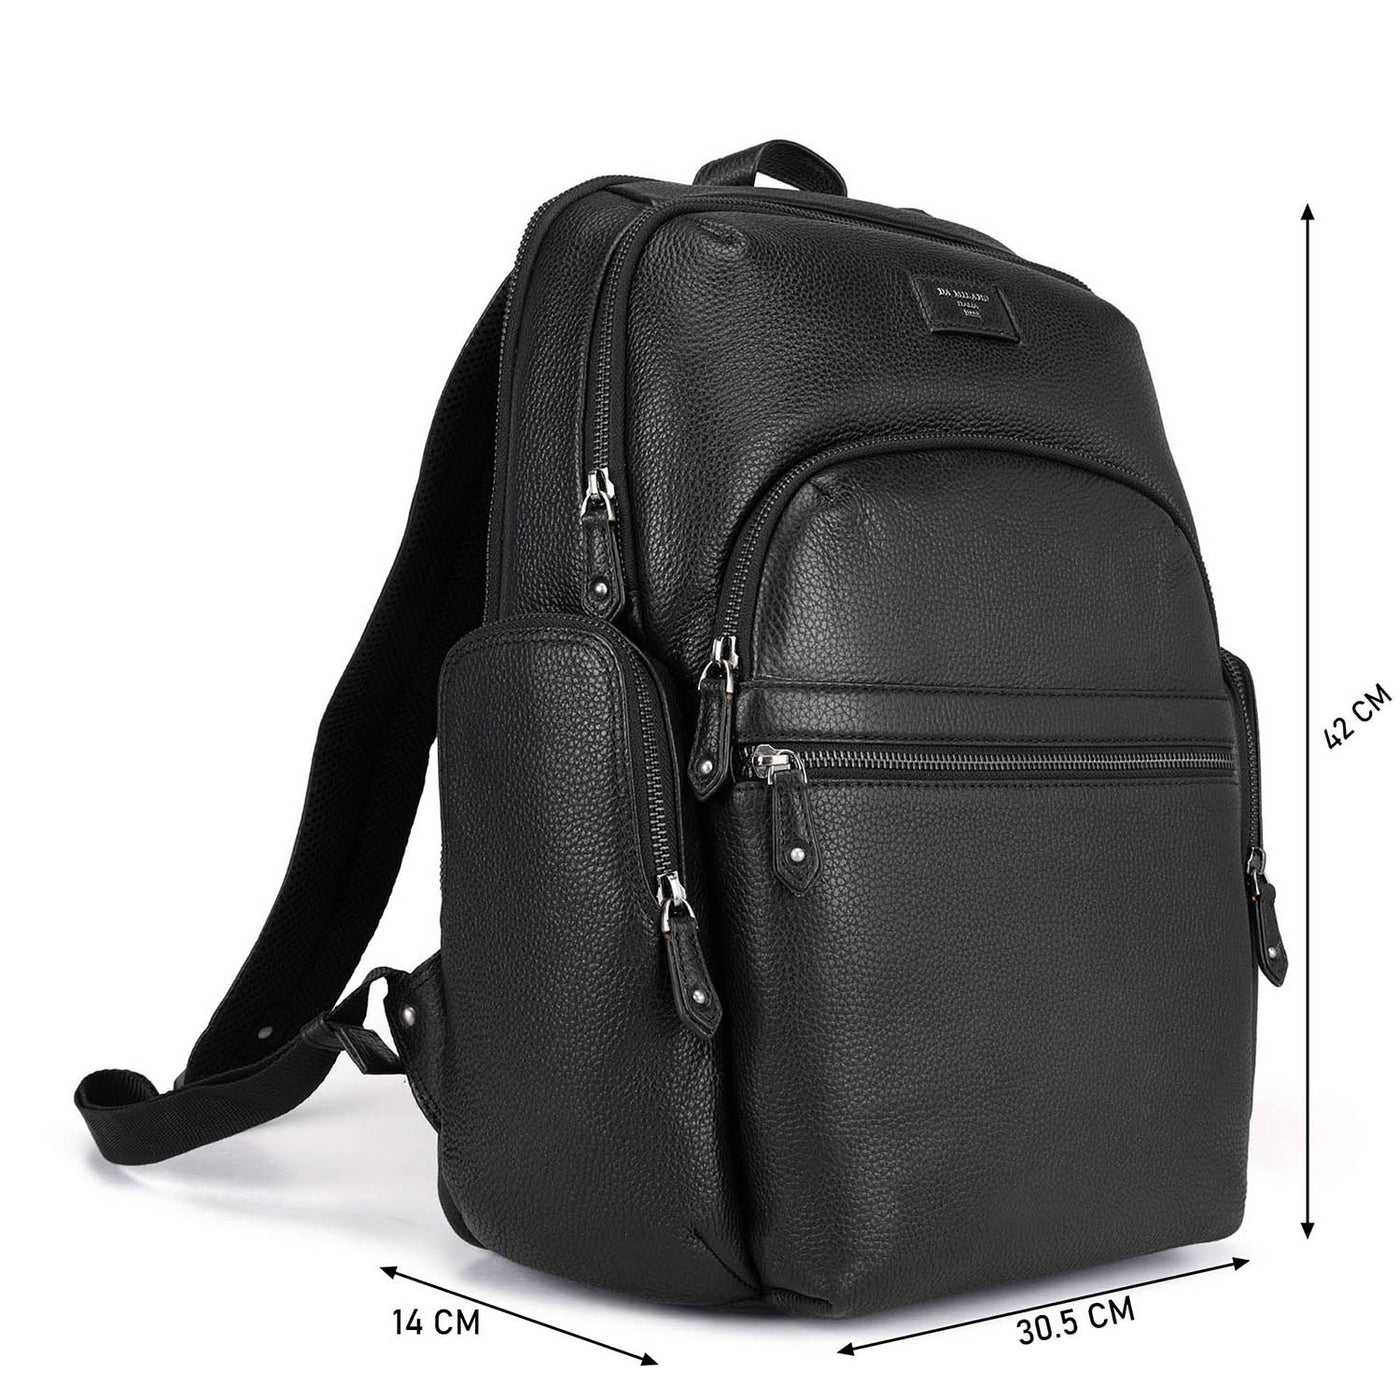 Wax Leather Backpack - Black